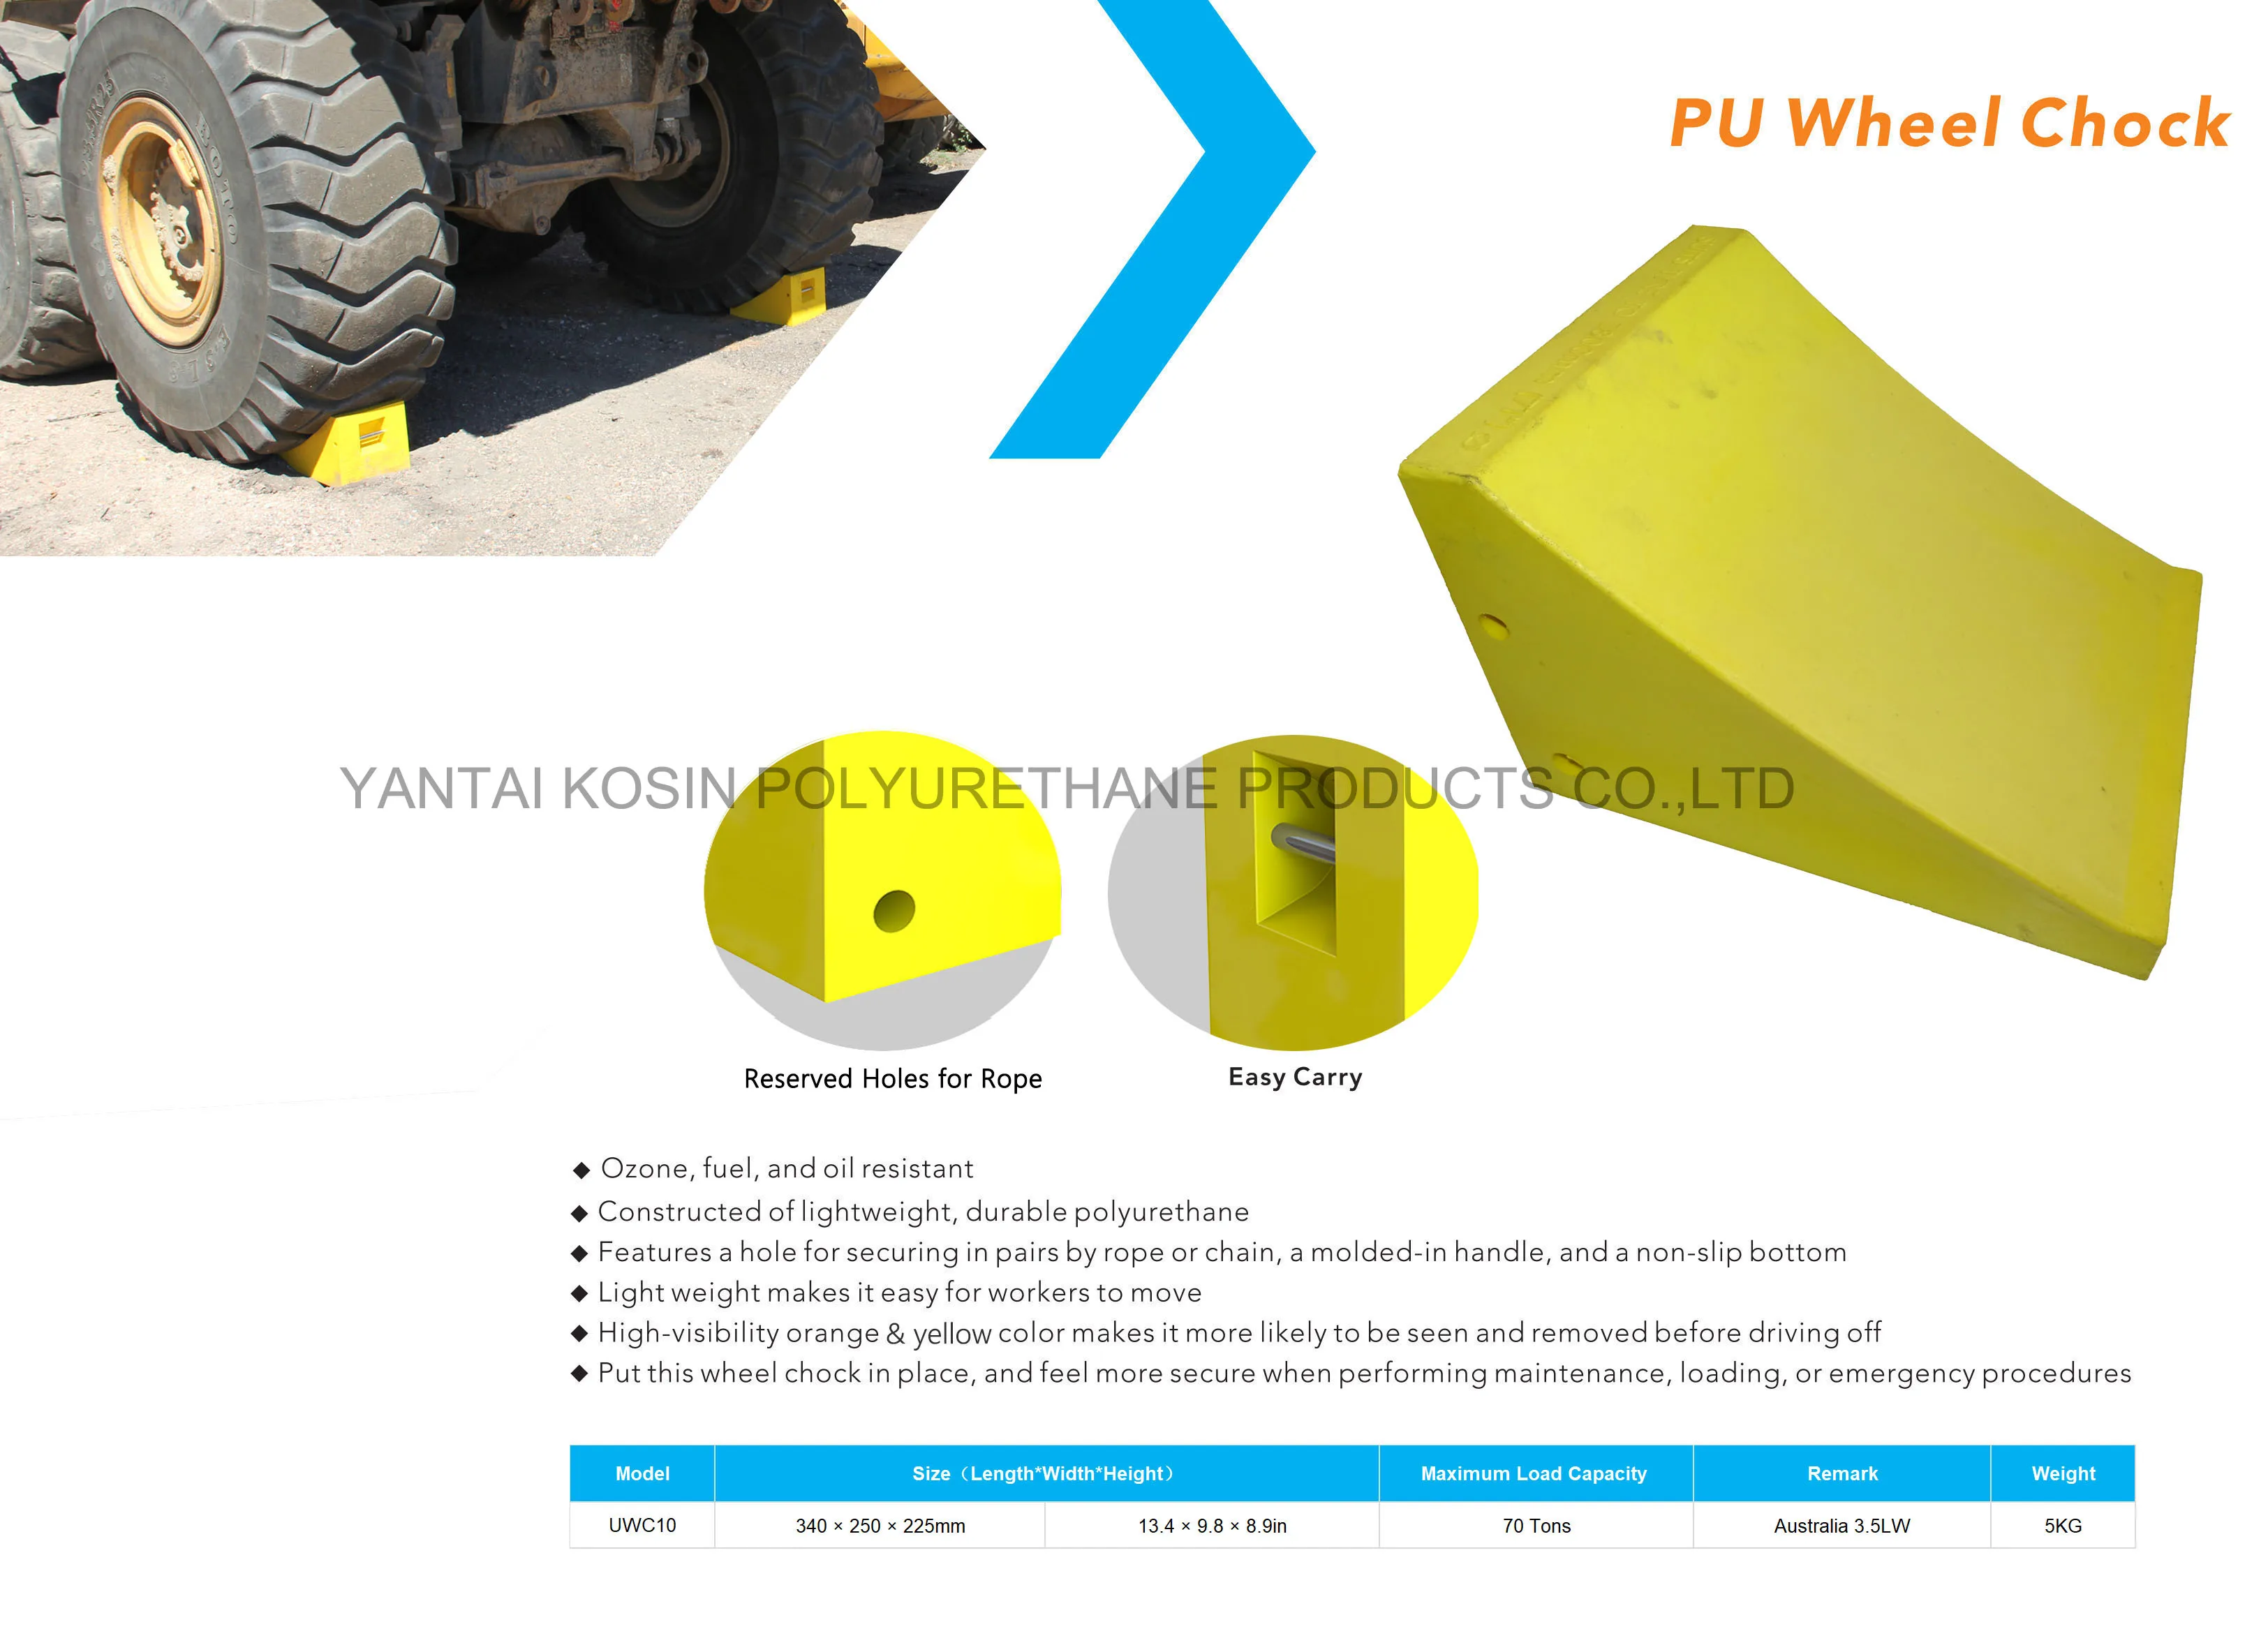 Lightweight Polyurethane Safety Wheel Chock  Stopper Yellow UWC10 Australia Size 3.5LW